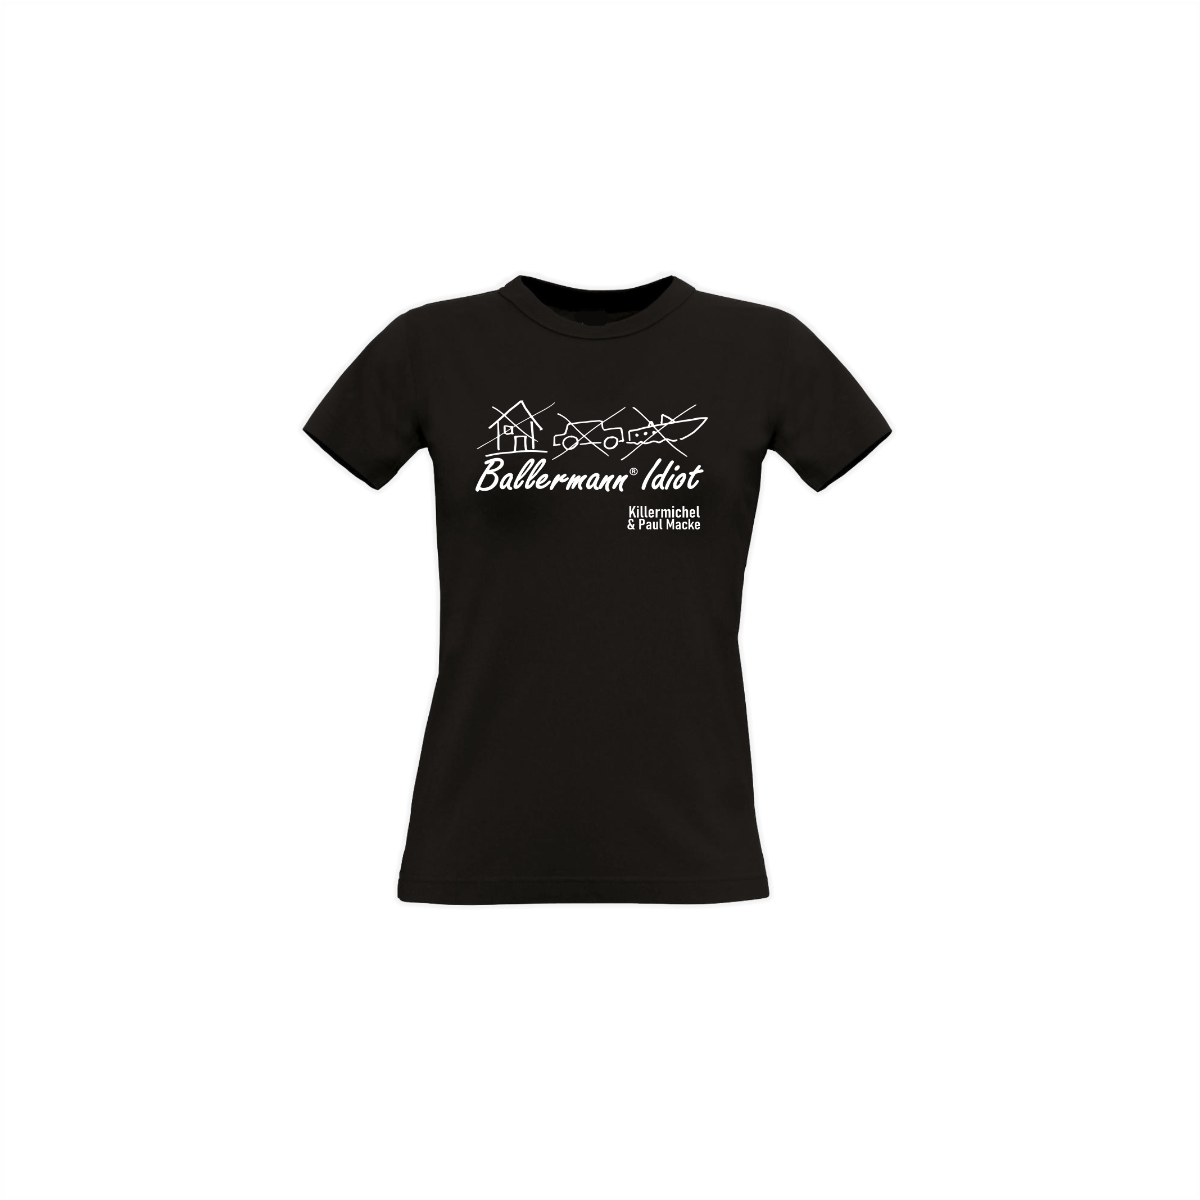 Girly-Shirt "BALLERMANN® IDIOT" schwarz